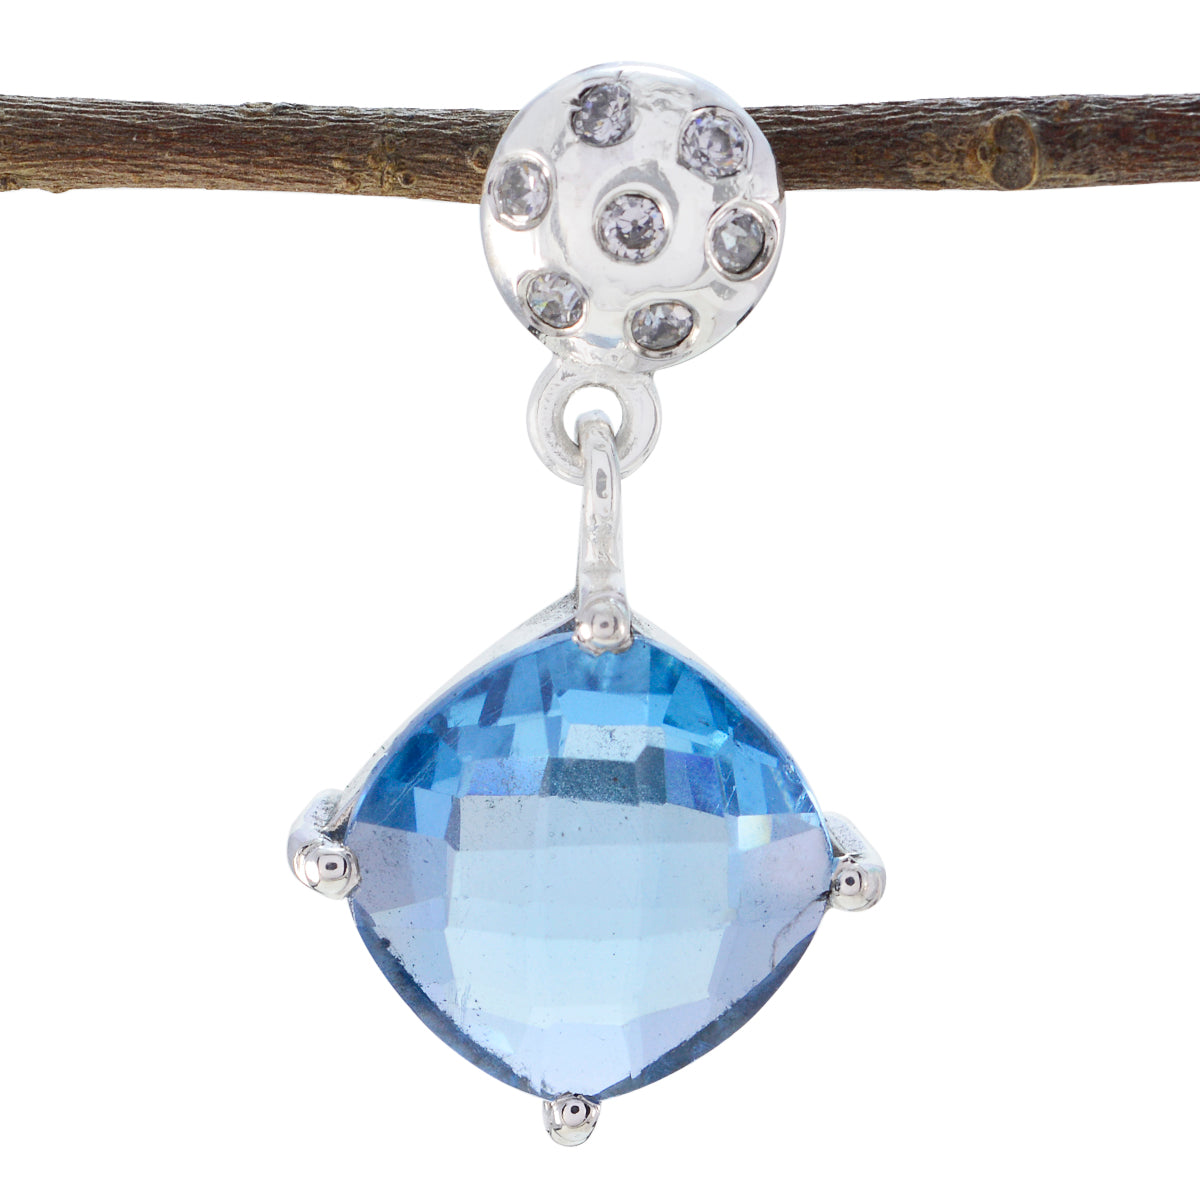 Riyo Real Gemstones Cushion checker Blue Blue Topaz 925 Silver Pendant gift for easter Sunday